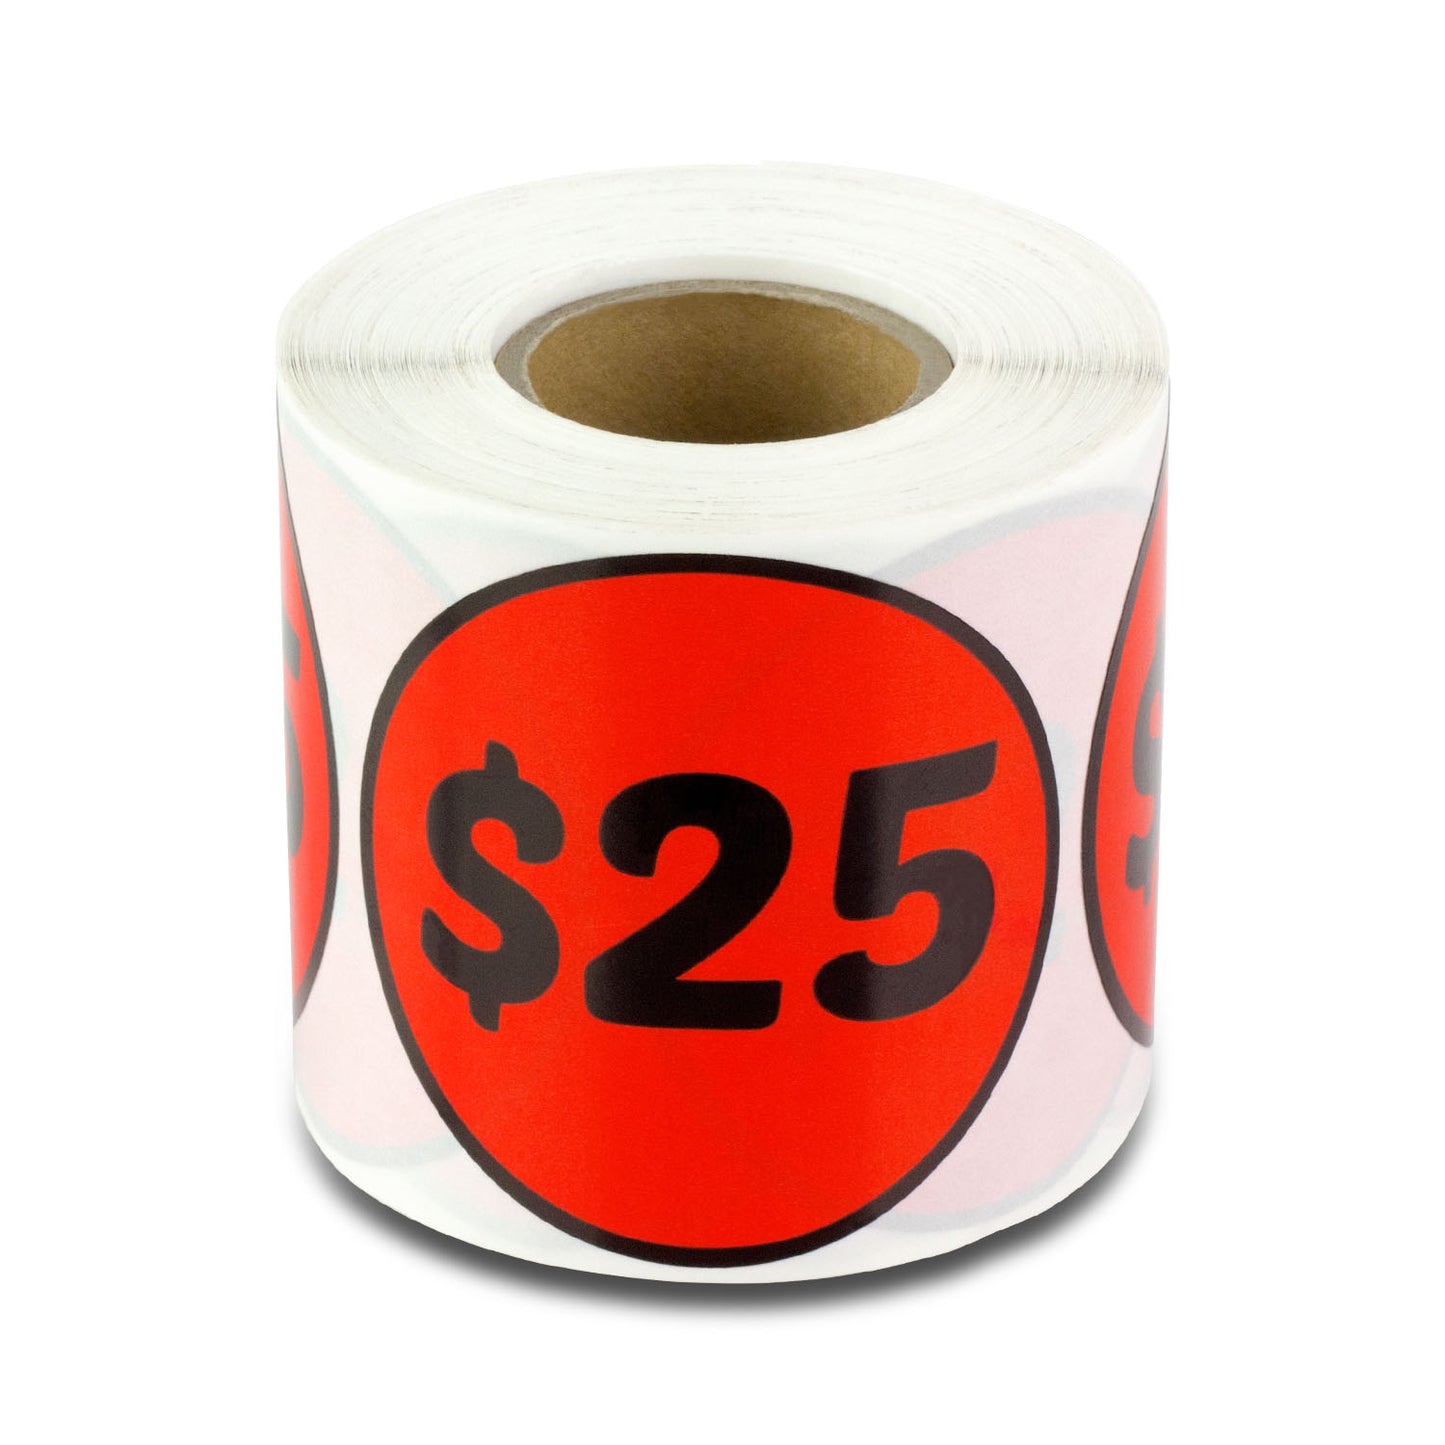 2 inch | Retail & Sales: 25 Dollar Stickers / $25 Dollar Price Stickers